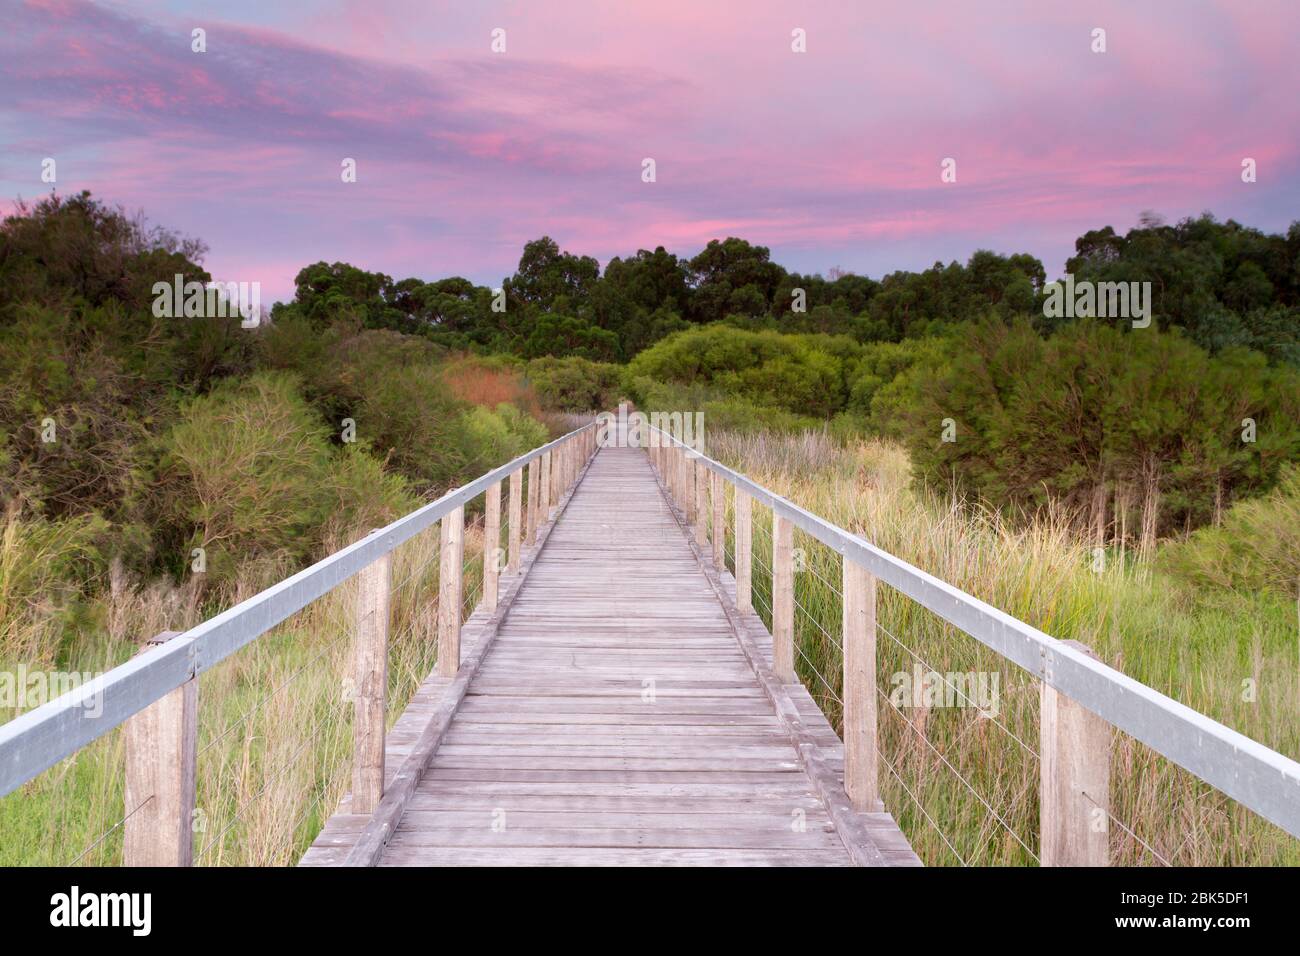 A wooden walkway through native bush in Western Australia at sunrise Stock Photo